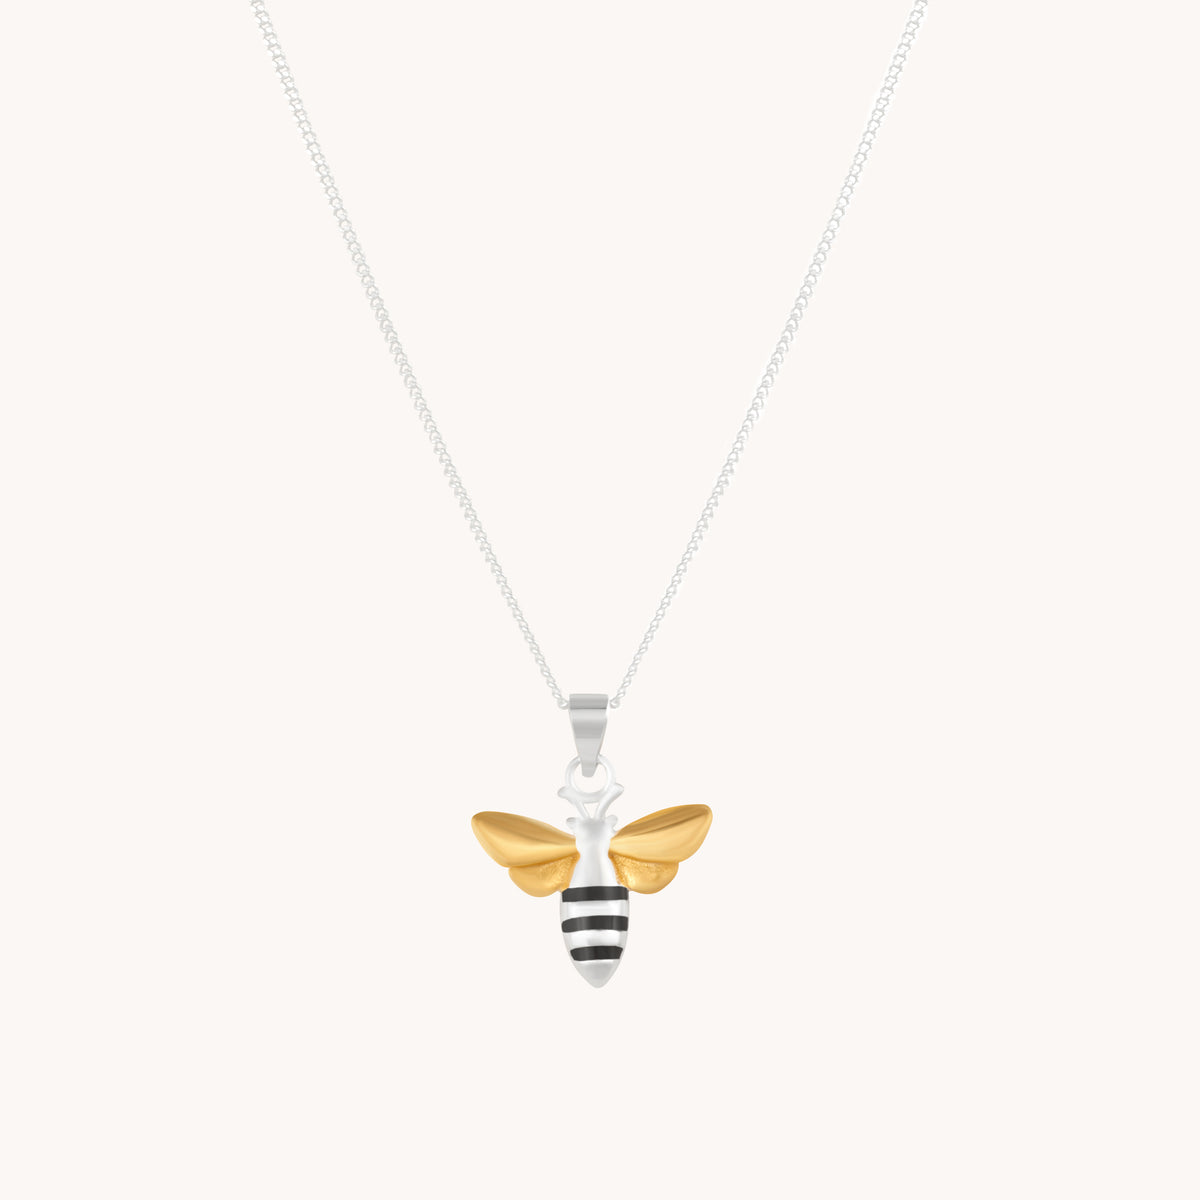 Honeybee Pendant With Chain